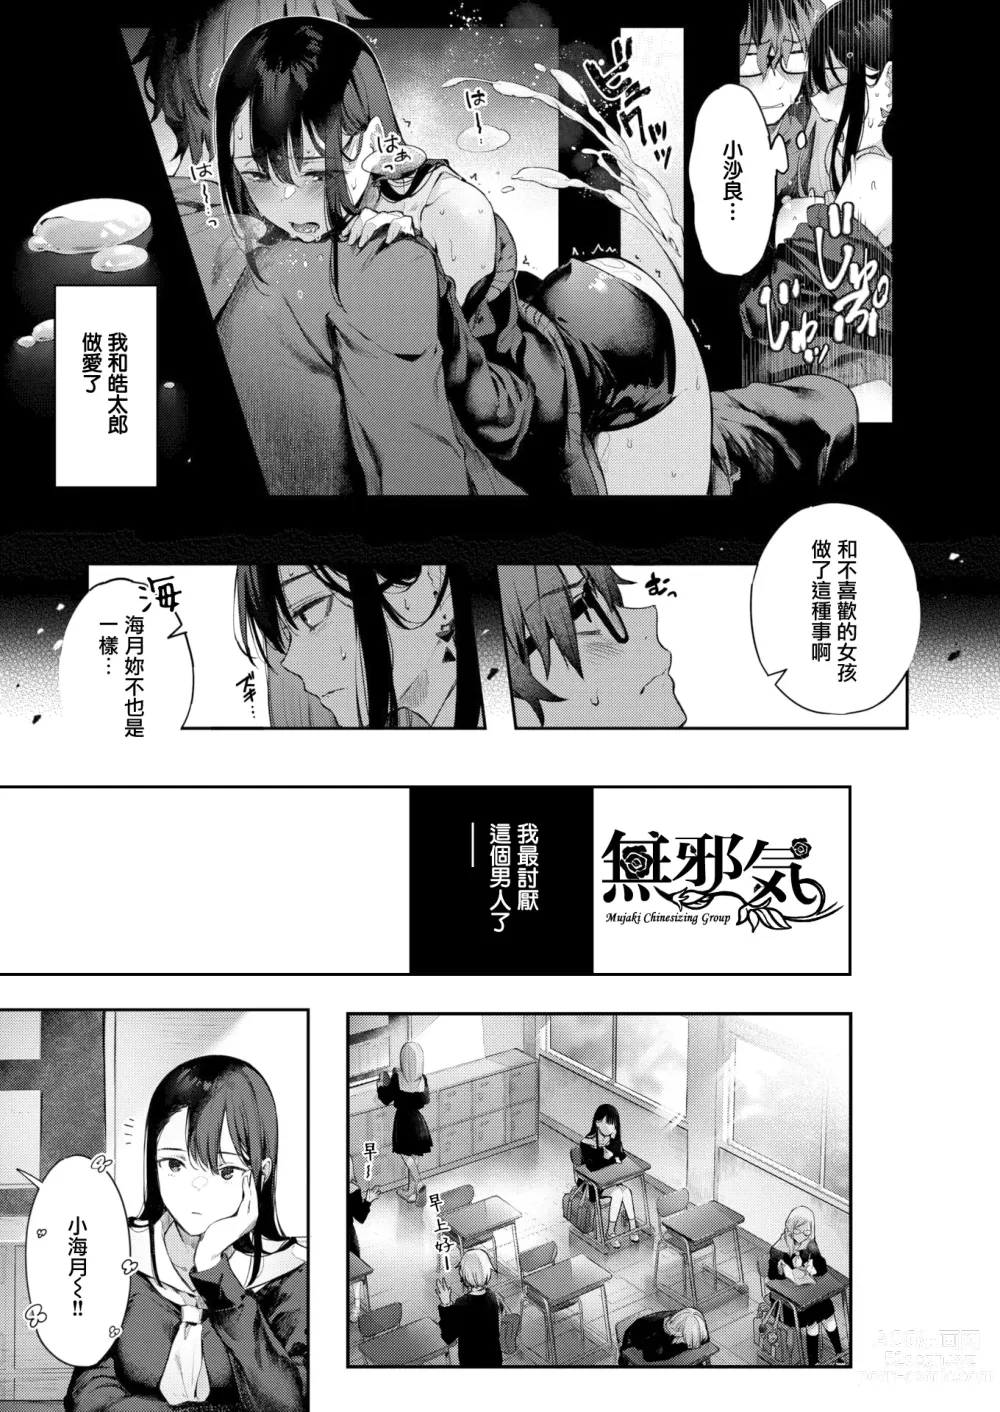 Page 3 of manga Watashi no Kirai na Hito (uncensored)